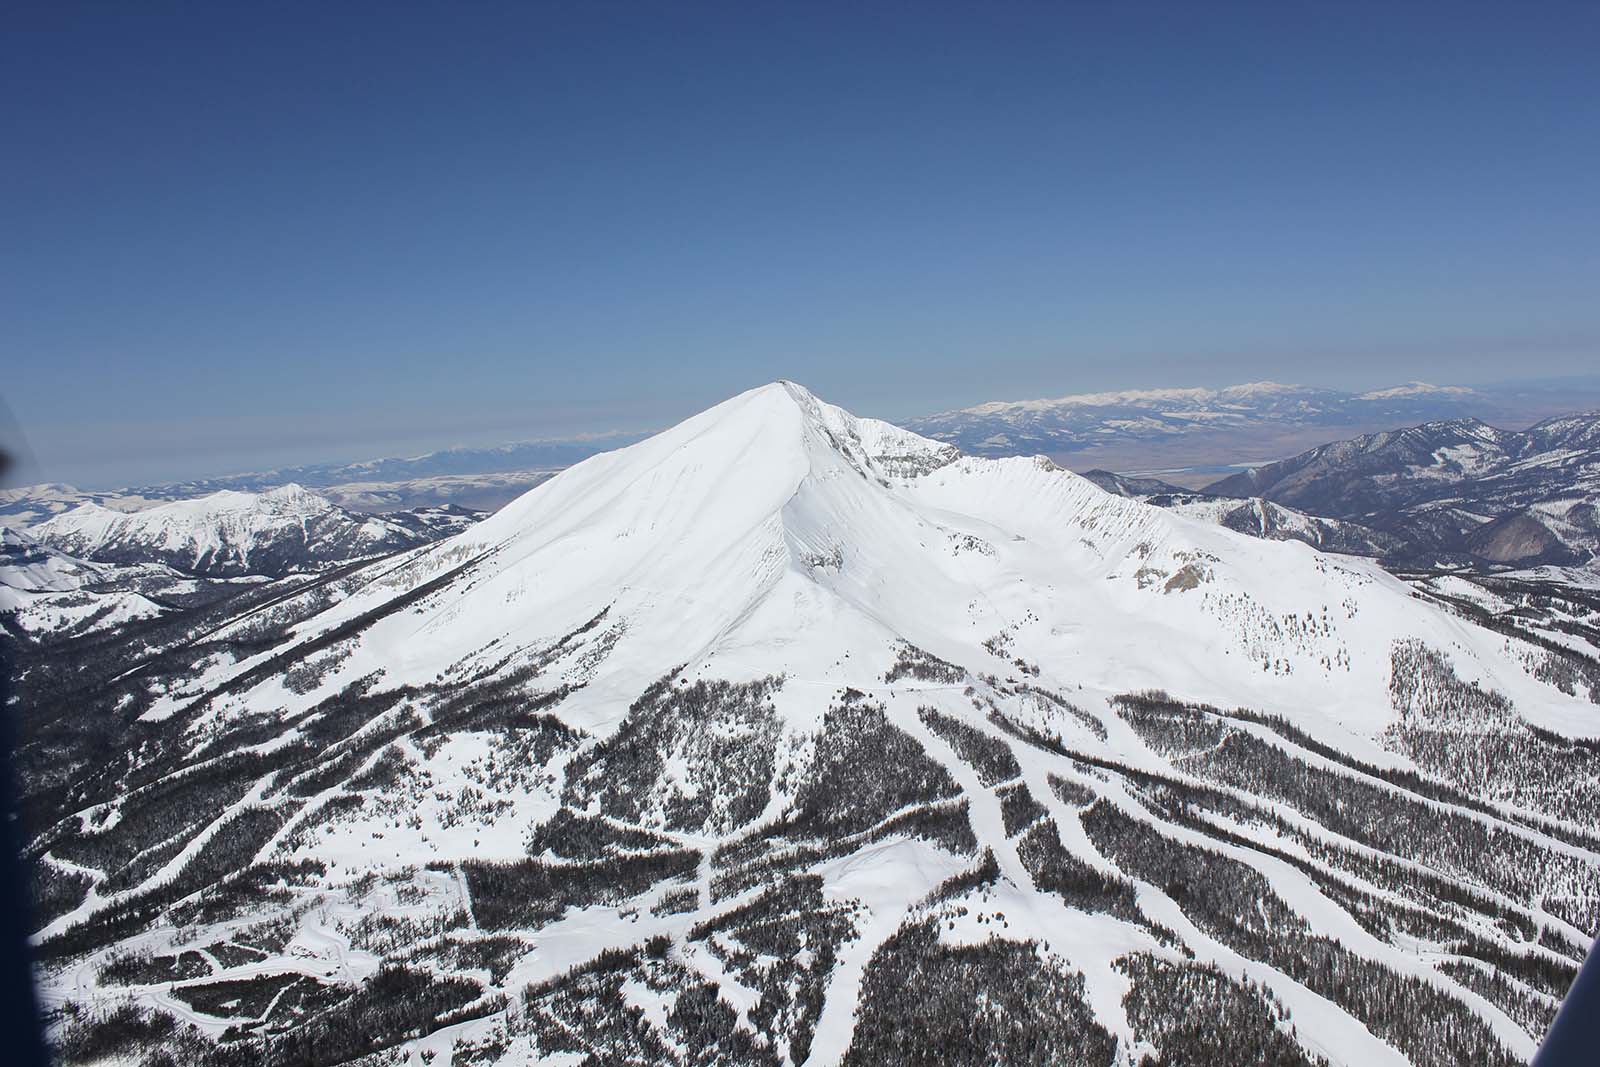 Big Sky, Montana, has a ski run that is almost 10km long